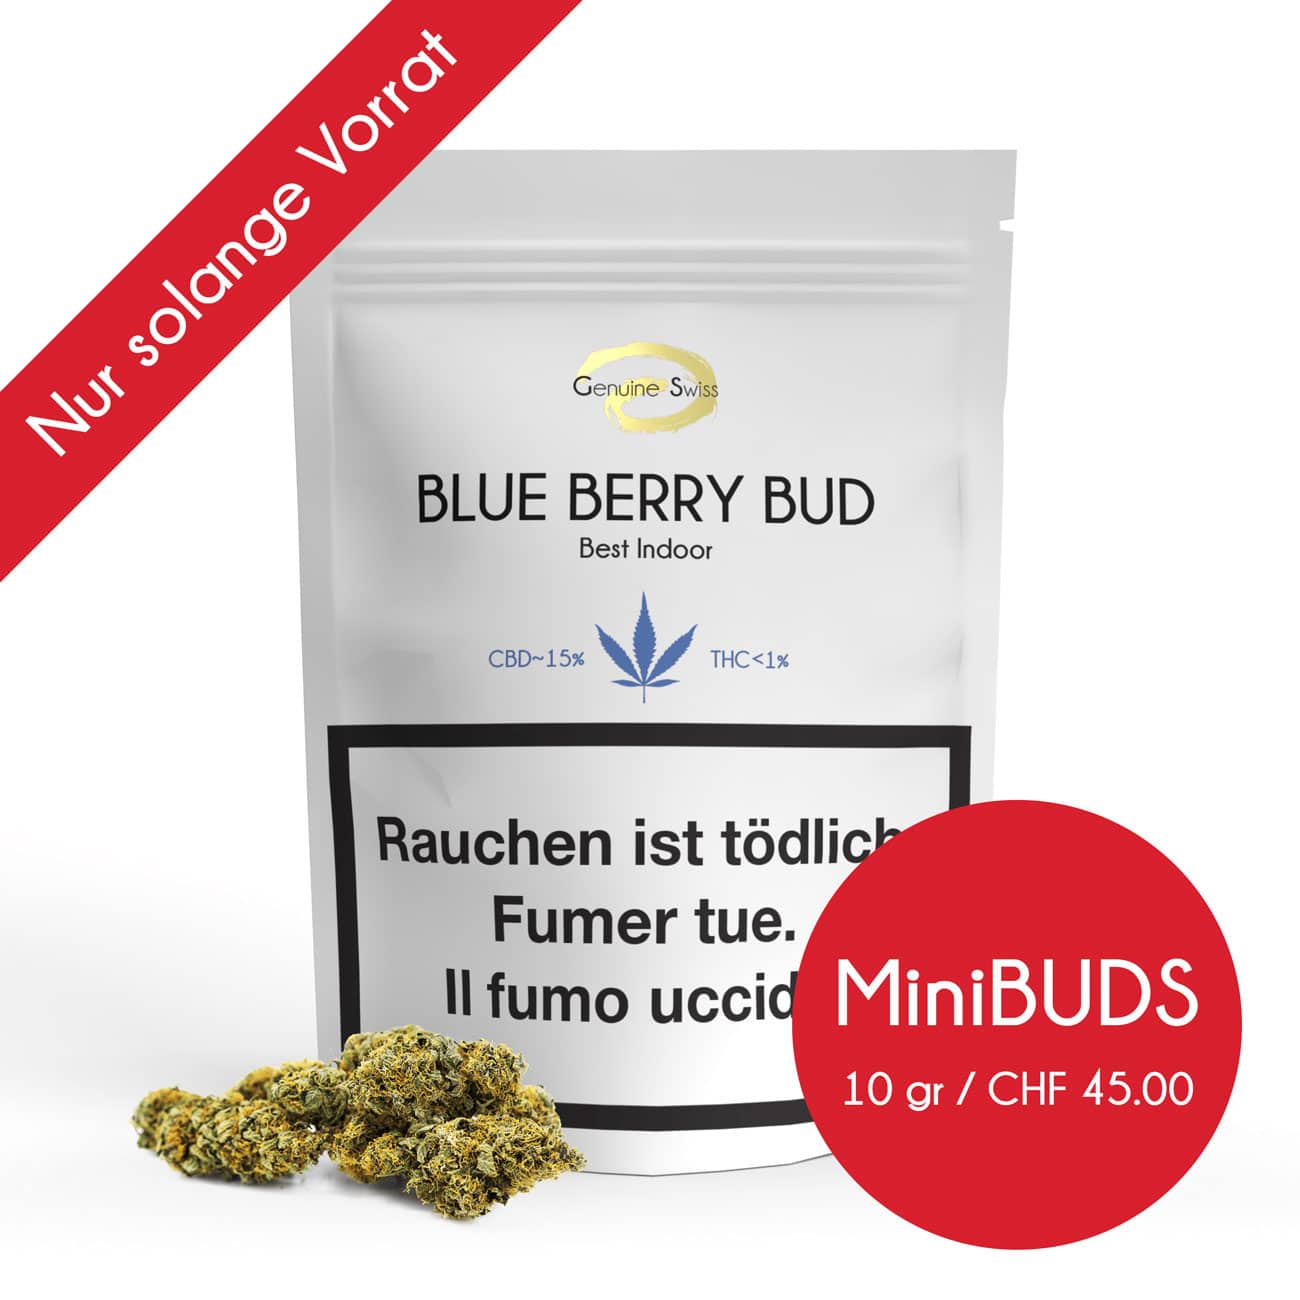 Genuine Swiss Blue Berry Minibuds • Small CBD Buds Indoor